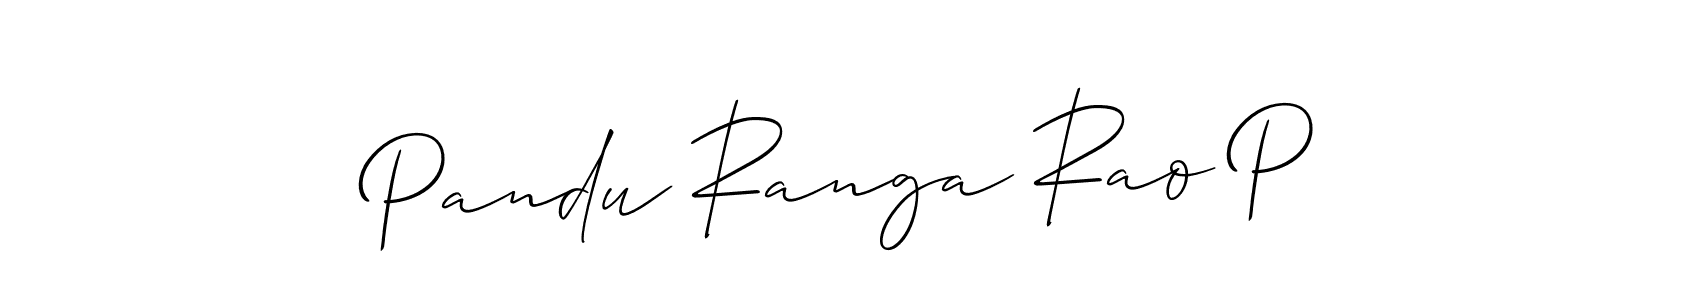 Make a beautiful signature design for name Pandu Ranga Rao P. Use this online signature maker to create a handwritten signature for free. Pandu Ranga Rao P signature style 2 images and pictures png